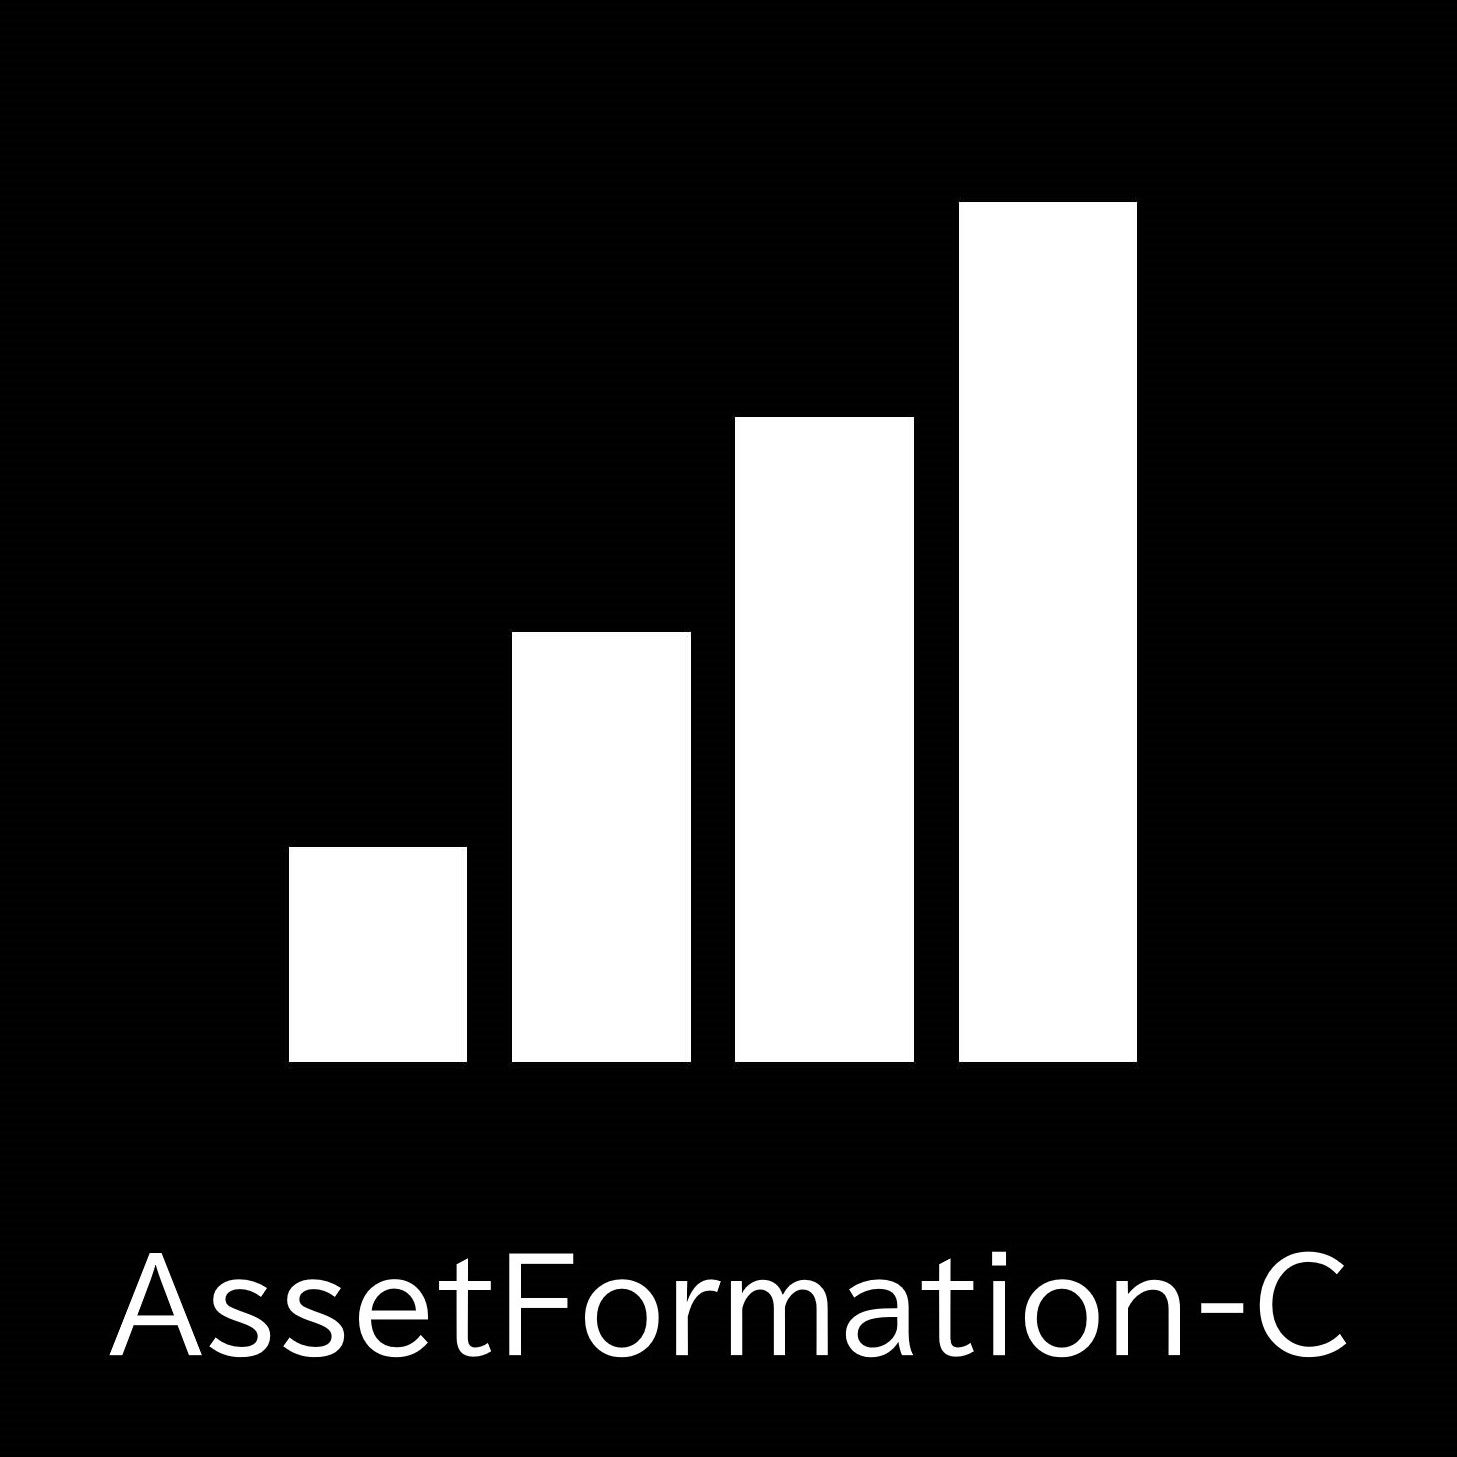 AssetFormation-C Auto Trading